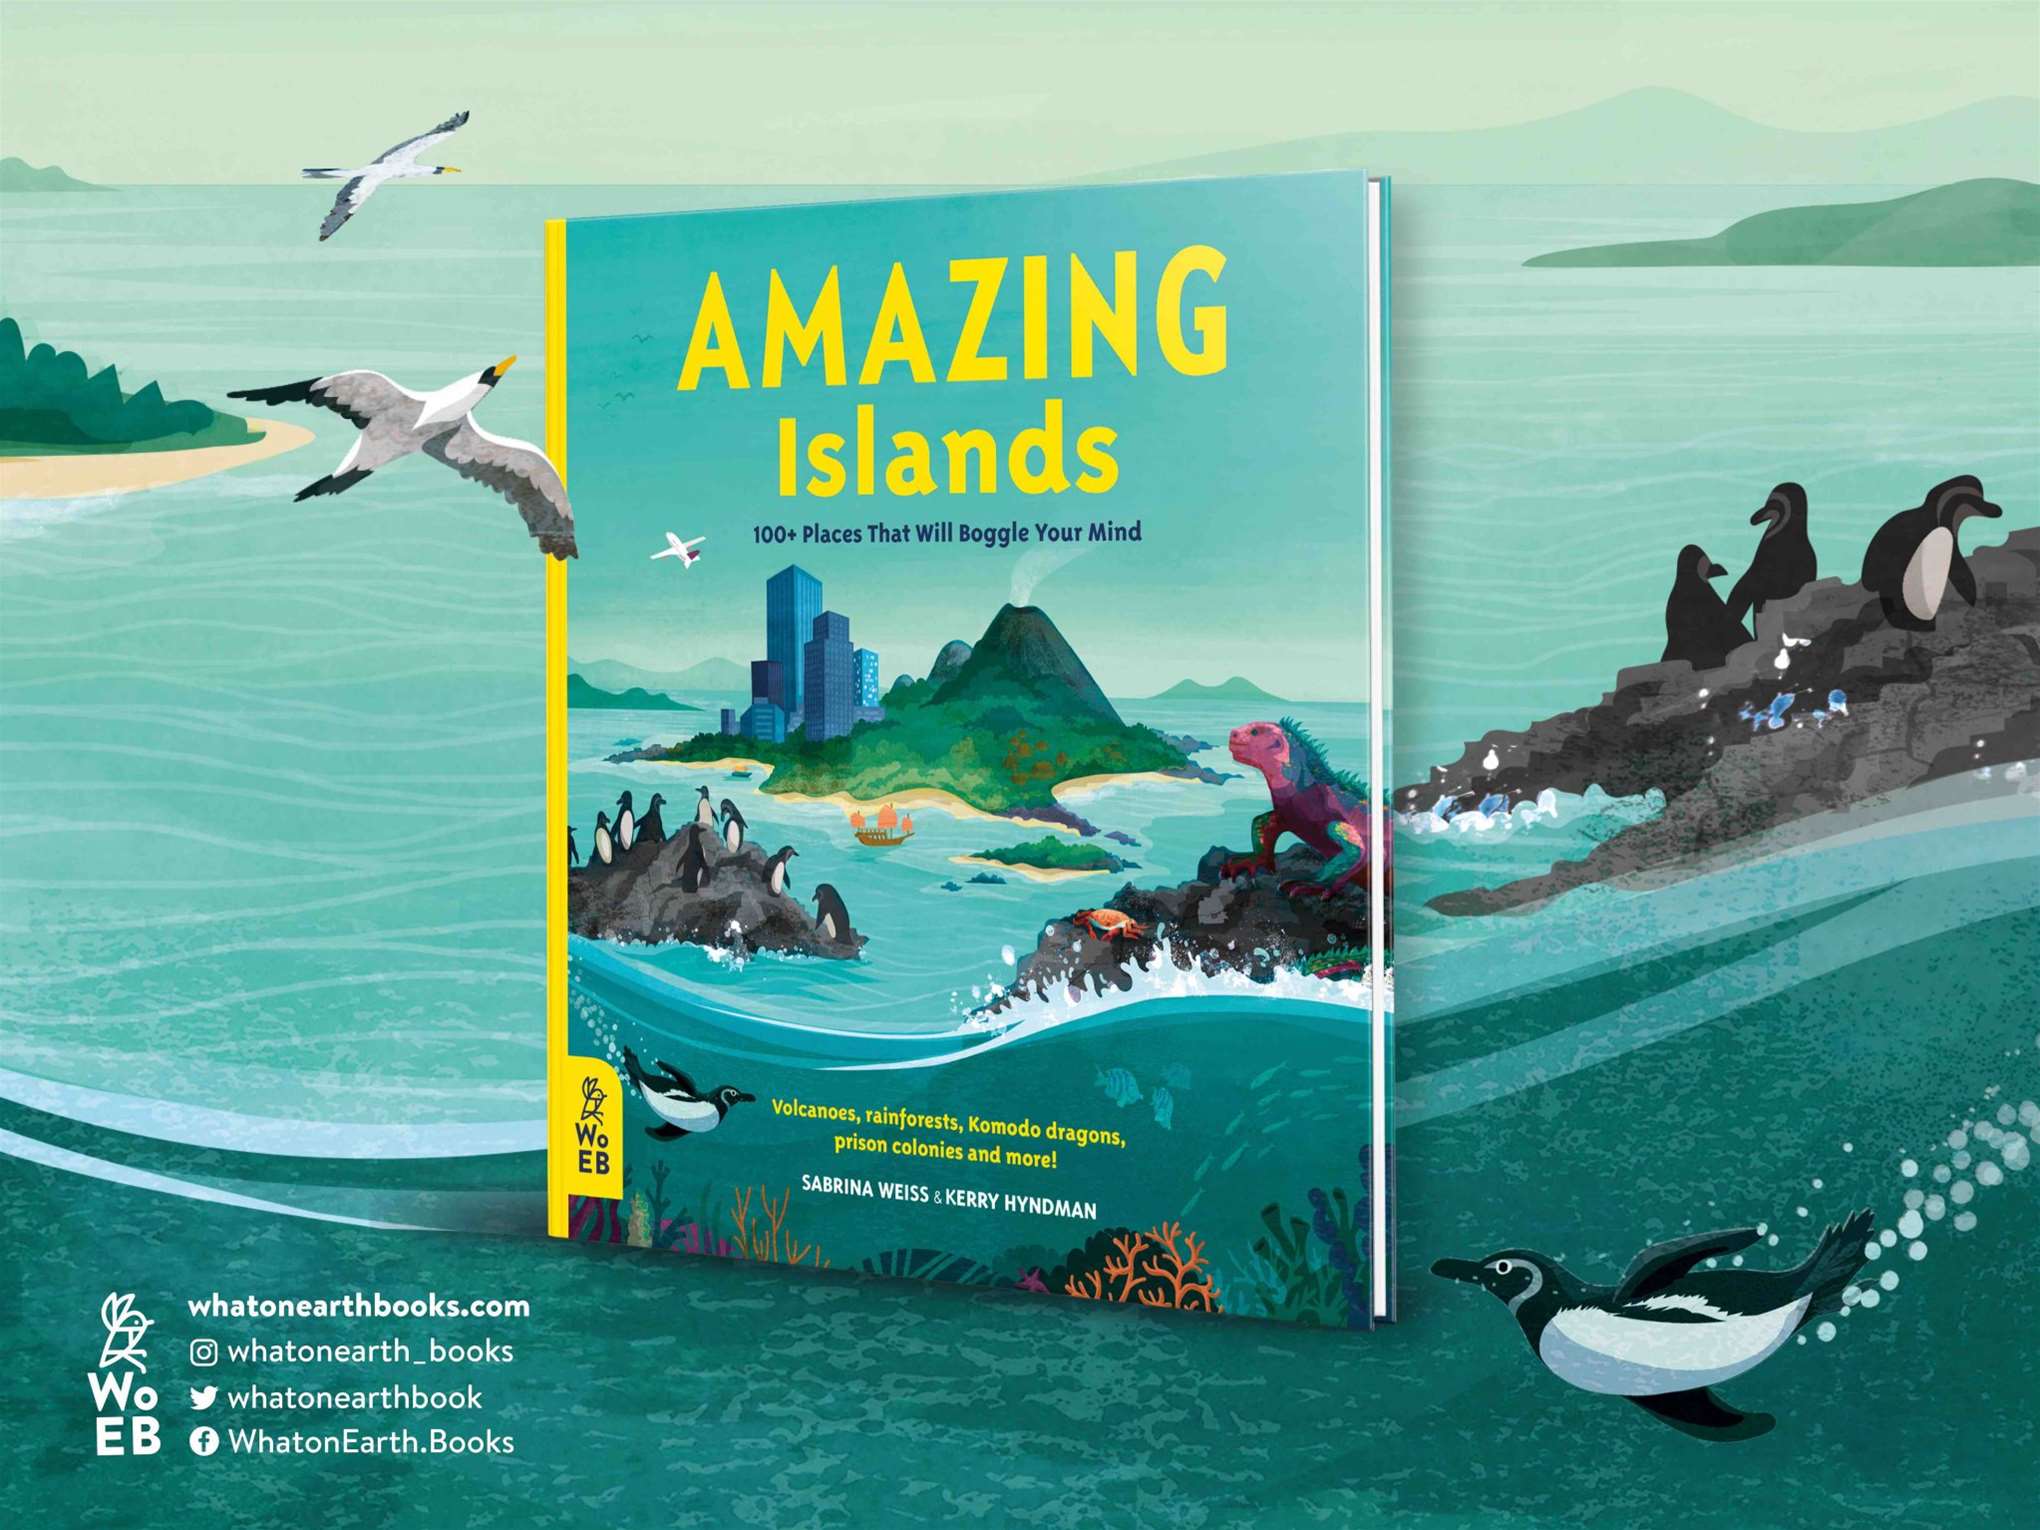 Kerry Hyndman, Book cover by Kerry Hyndman about Amazing Islands